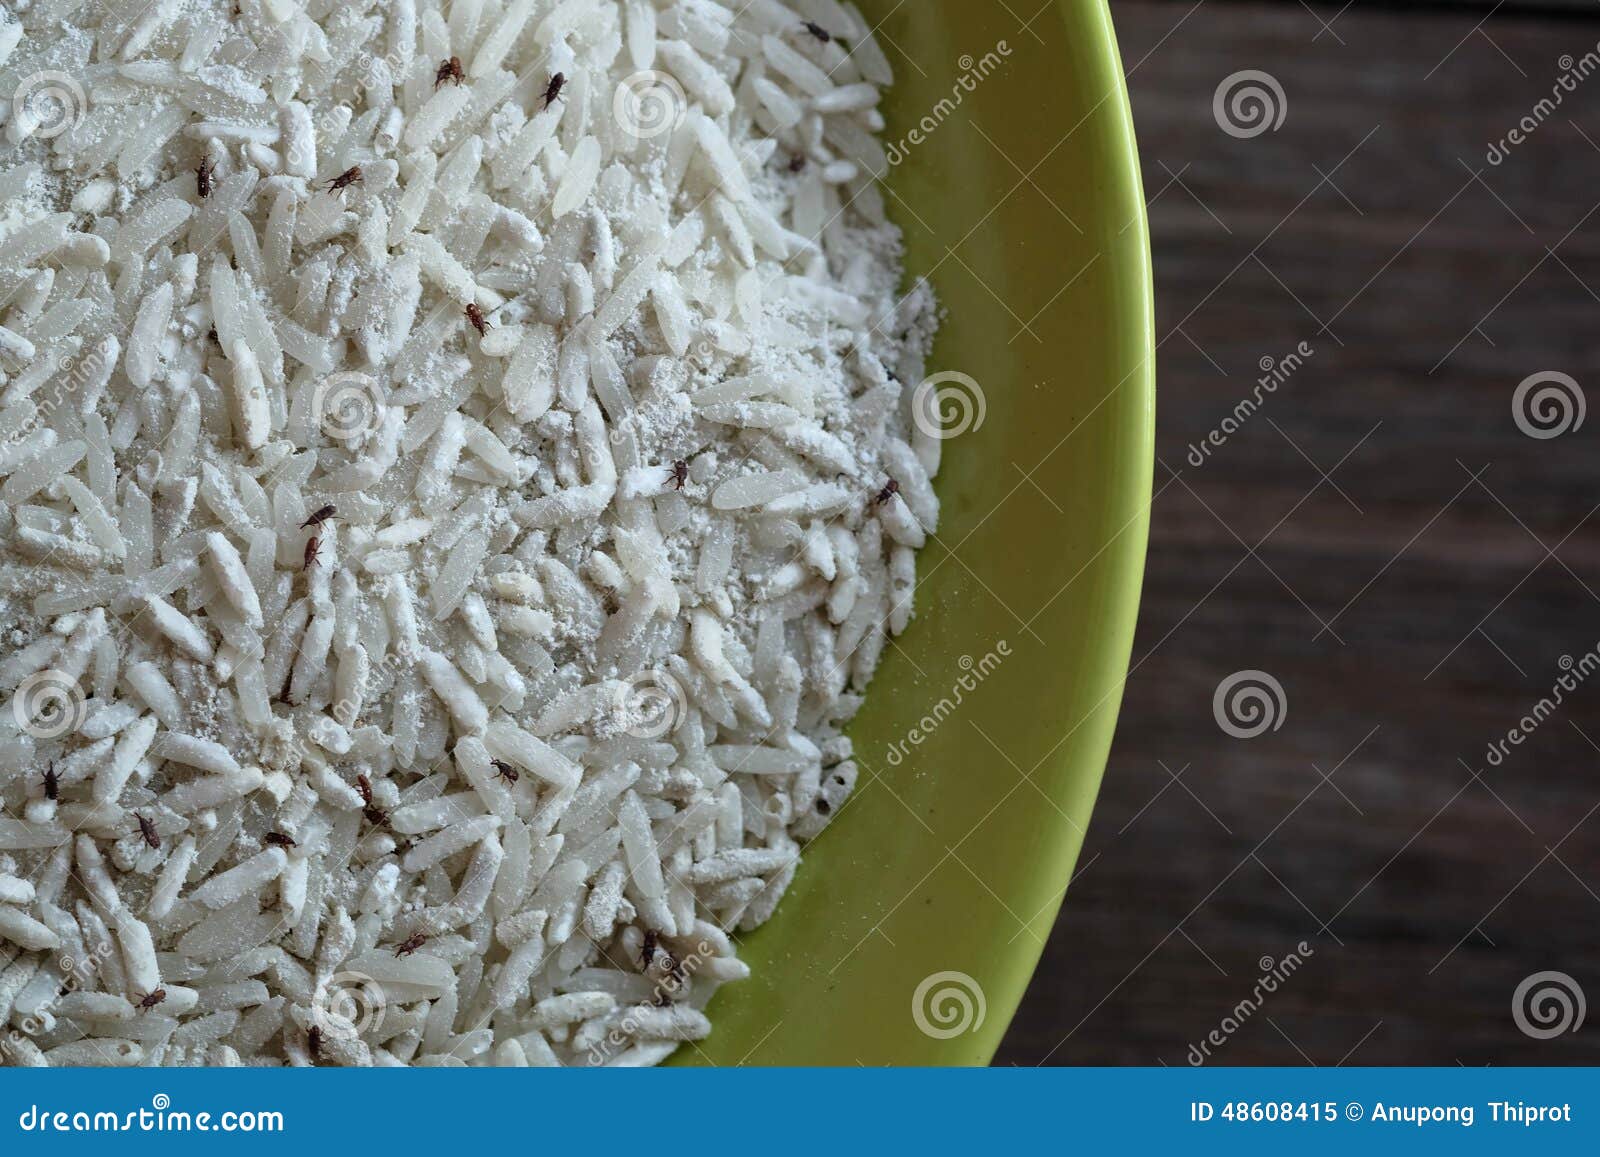 weevils destroy rice